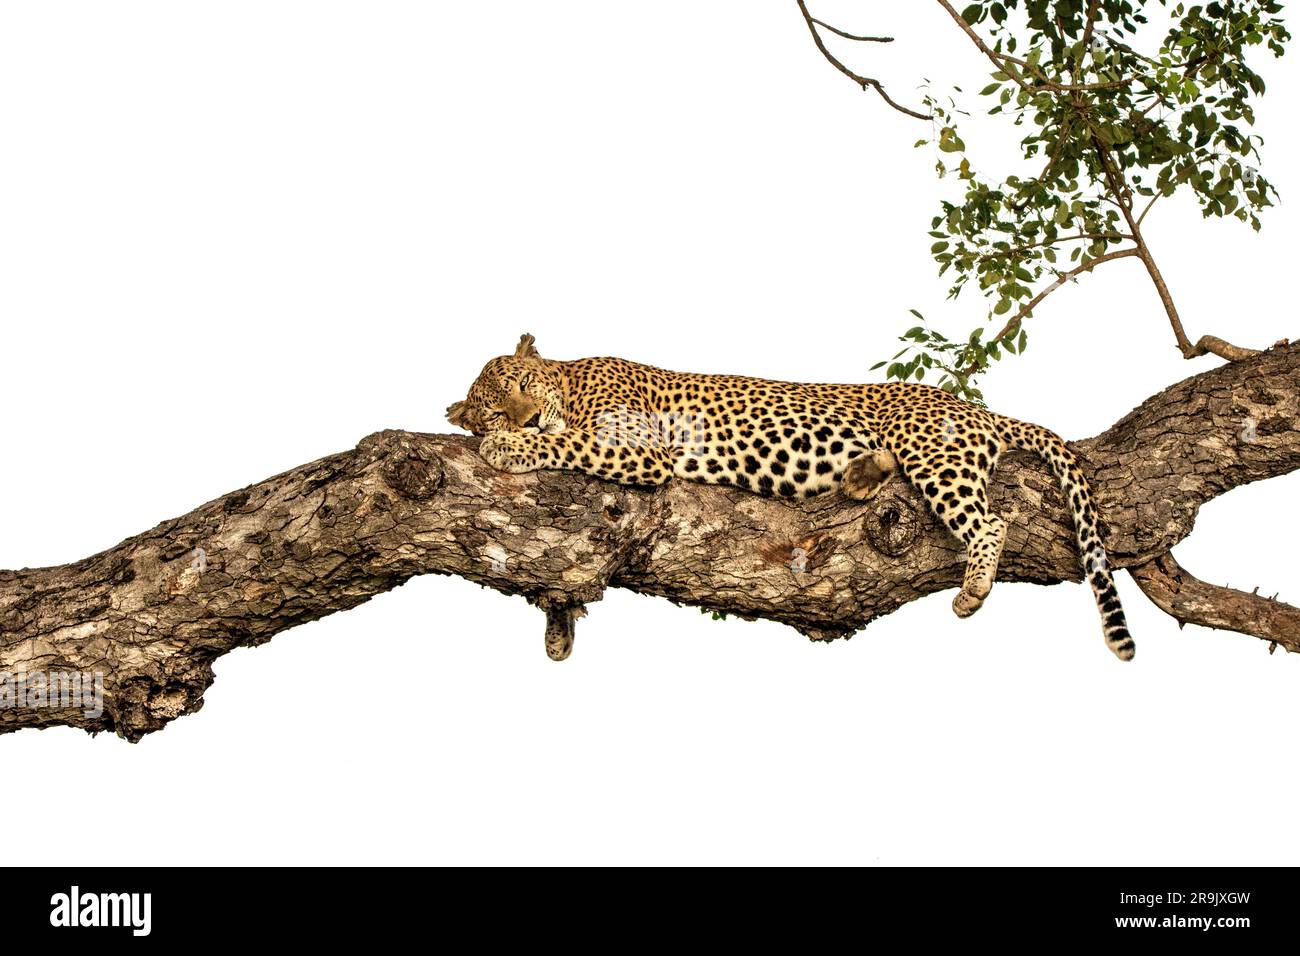 A male leopard, Panthera pardus, asleep in a Marula tree, Sclerocarya birrea. Stock Photo